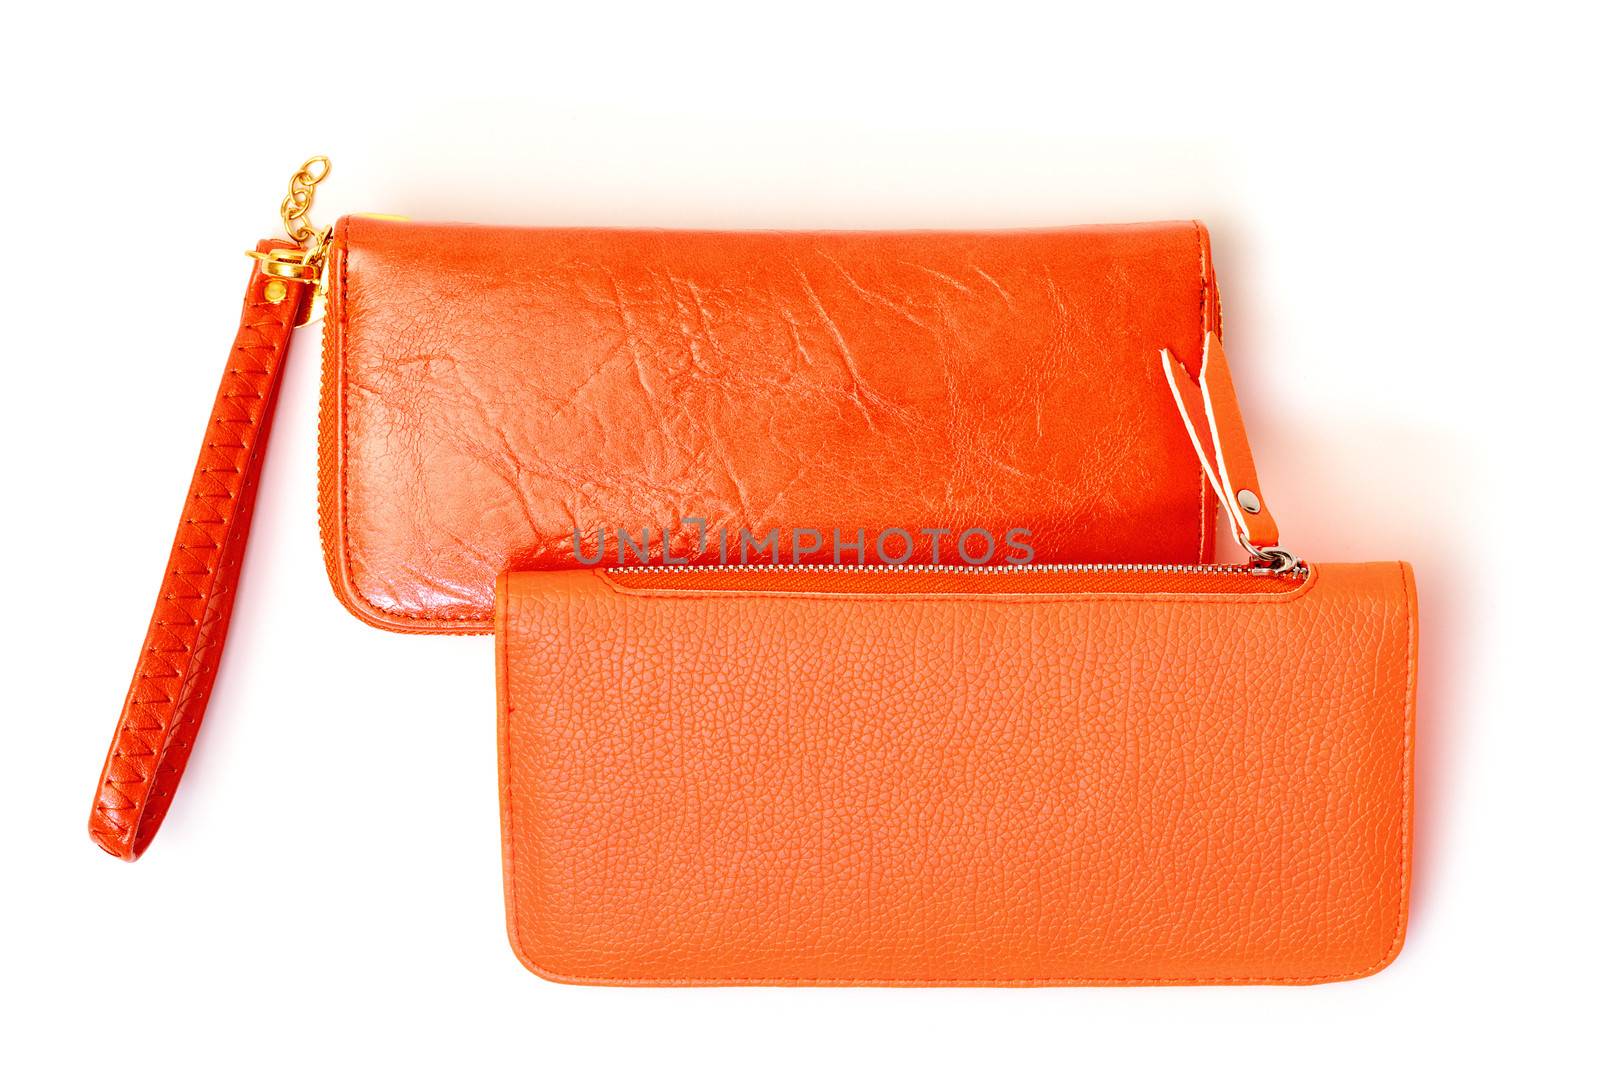 New Orange Leather Wallets on white background